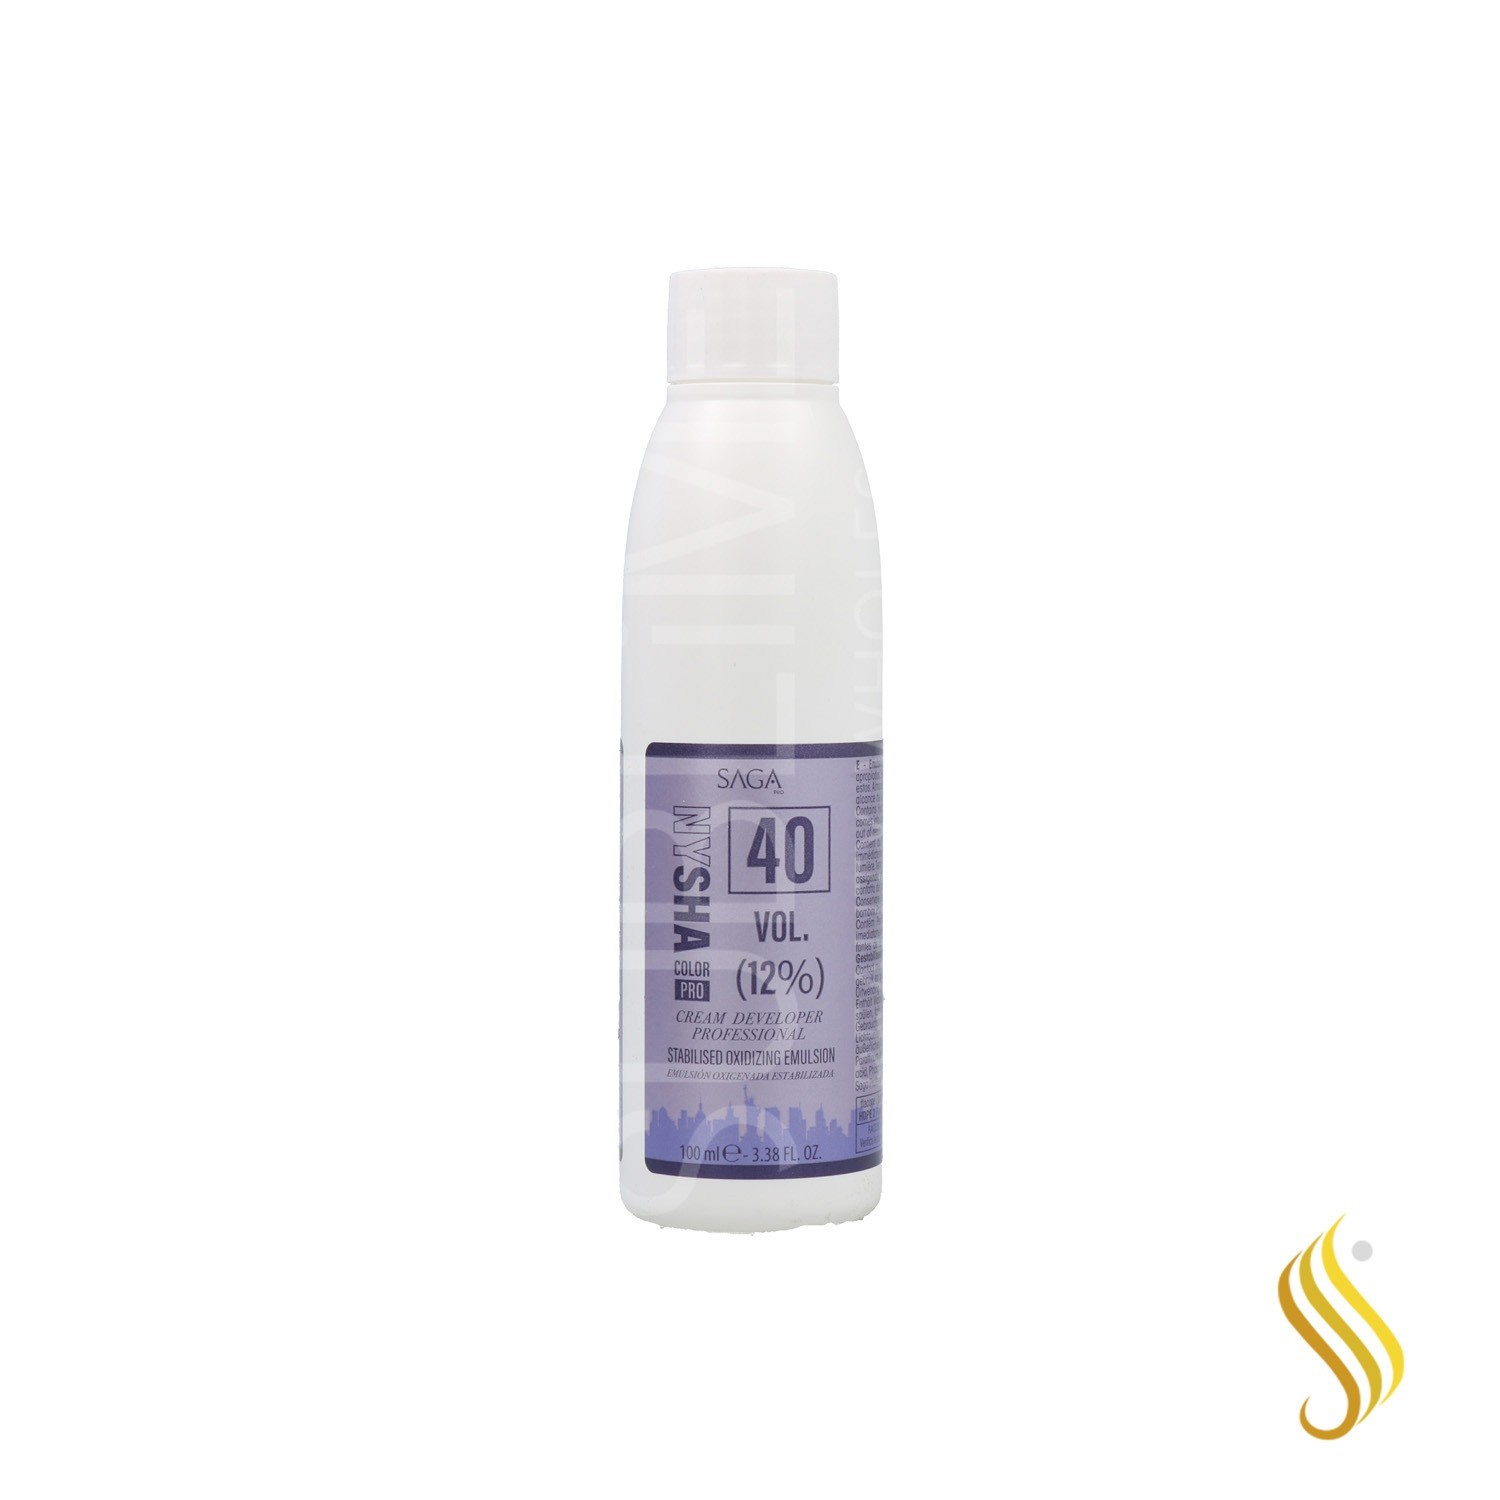 Saga Nysha Color Pro Oxidante 40 Vol (12%) 100 ml